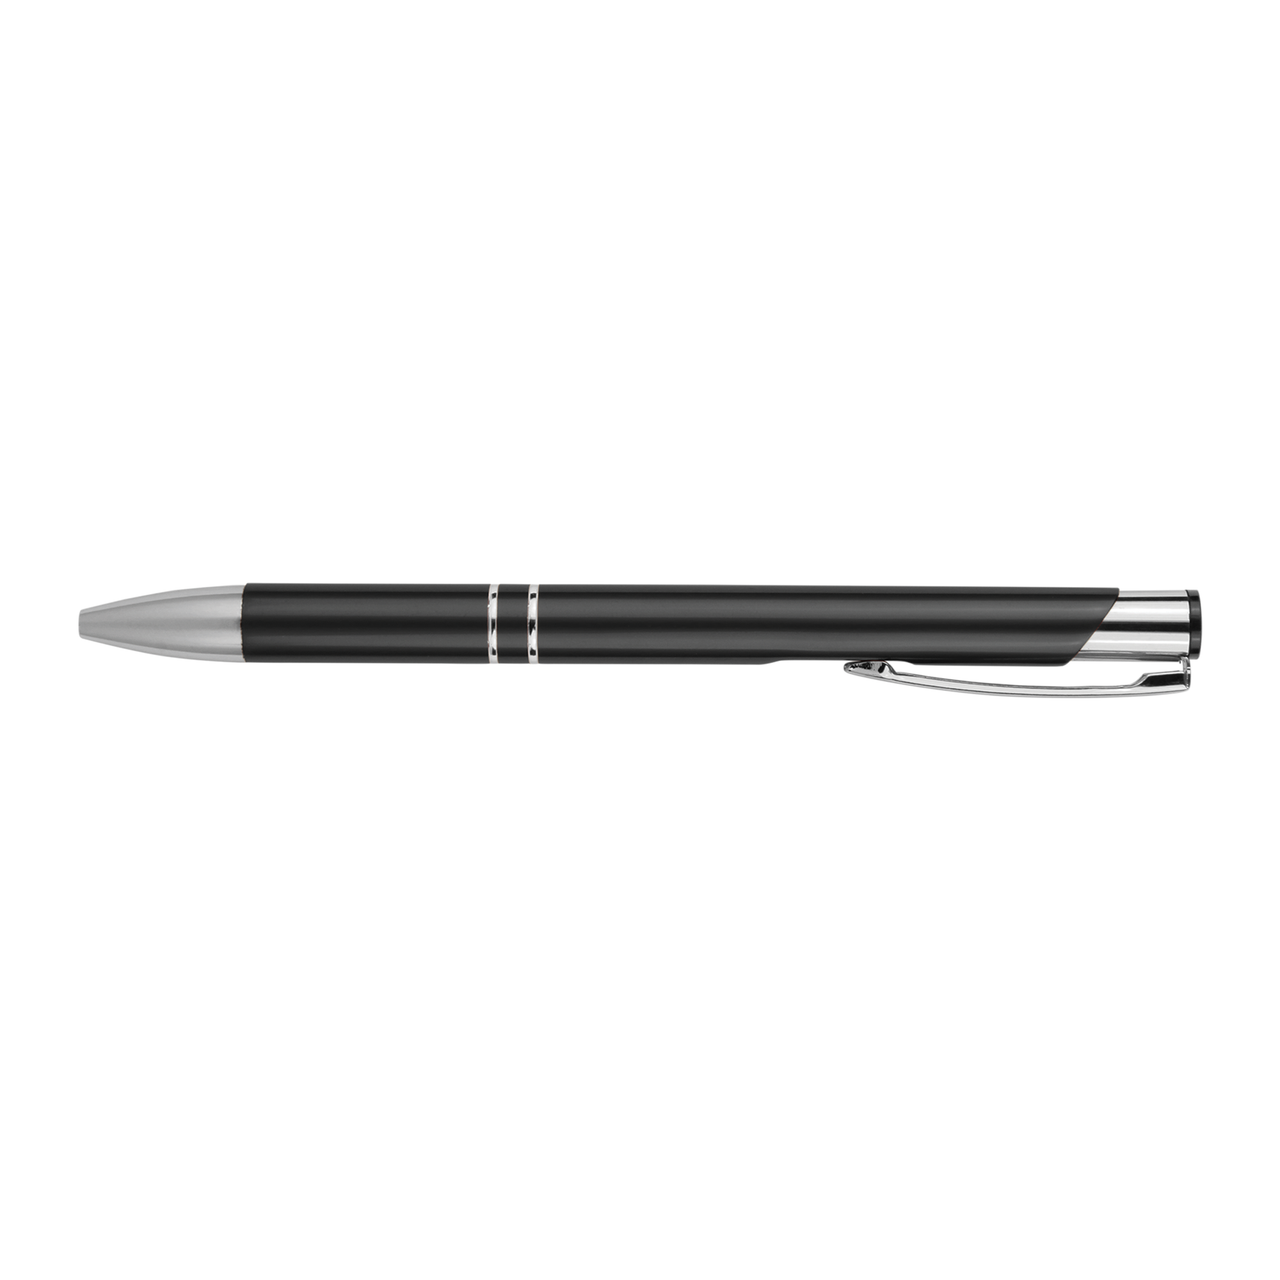 Hello Beautiful Metal Pens | Motivational Writing Tools Office Supplies Coworker Gifts Stocking Stuffer Baum Designs